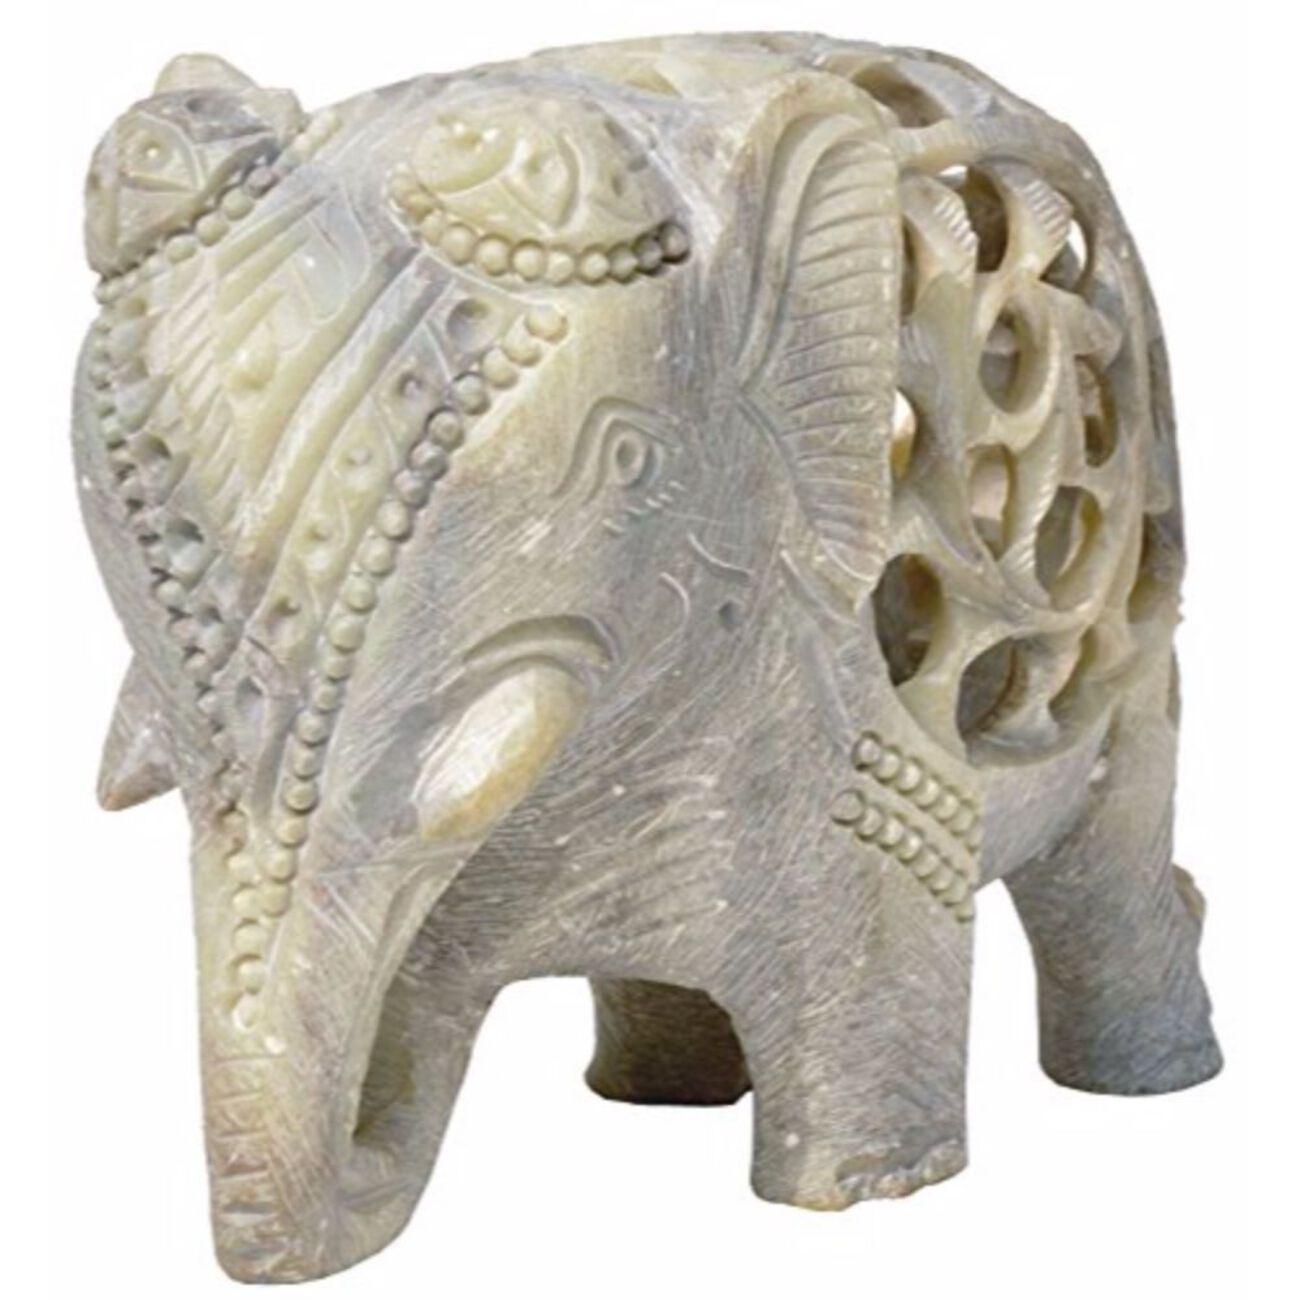 Benzara Handmade Soapstone Elephant Figurine With Baby Elephant Inside, White